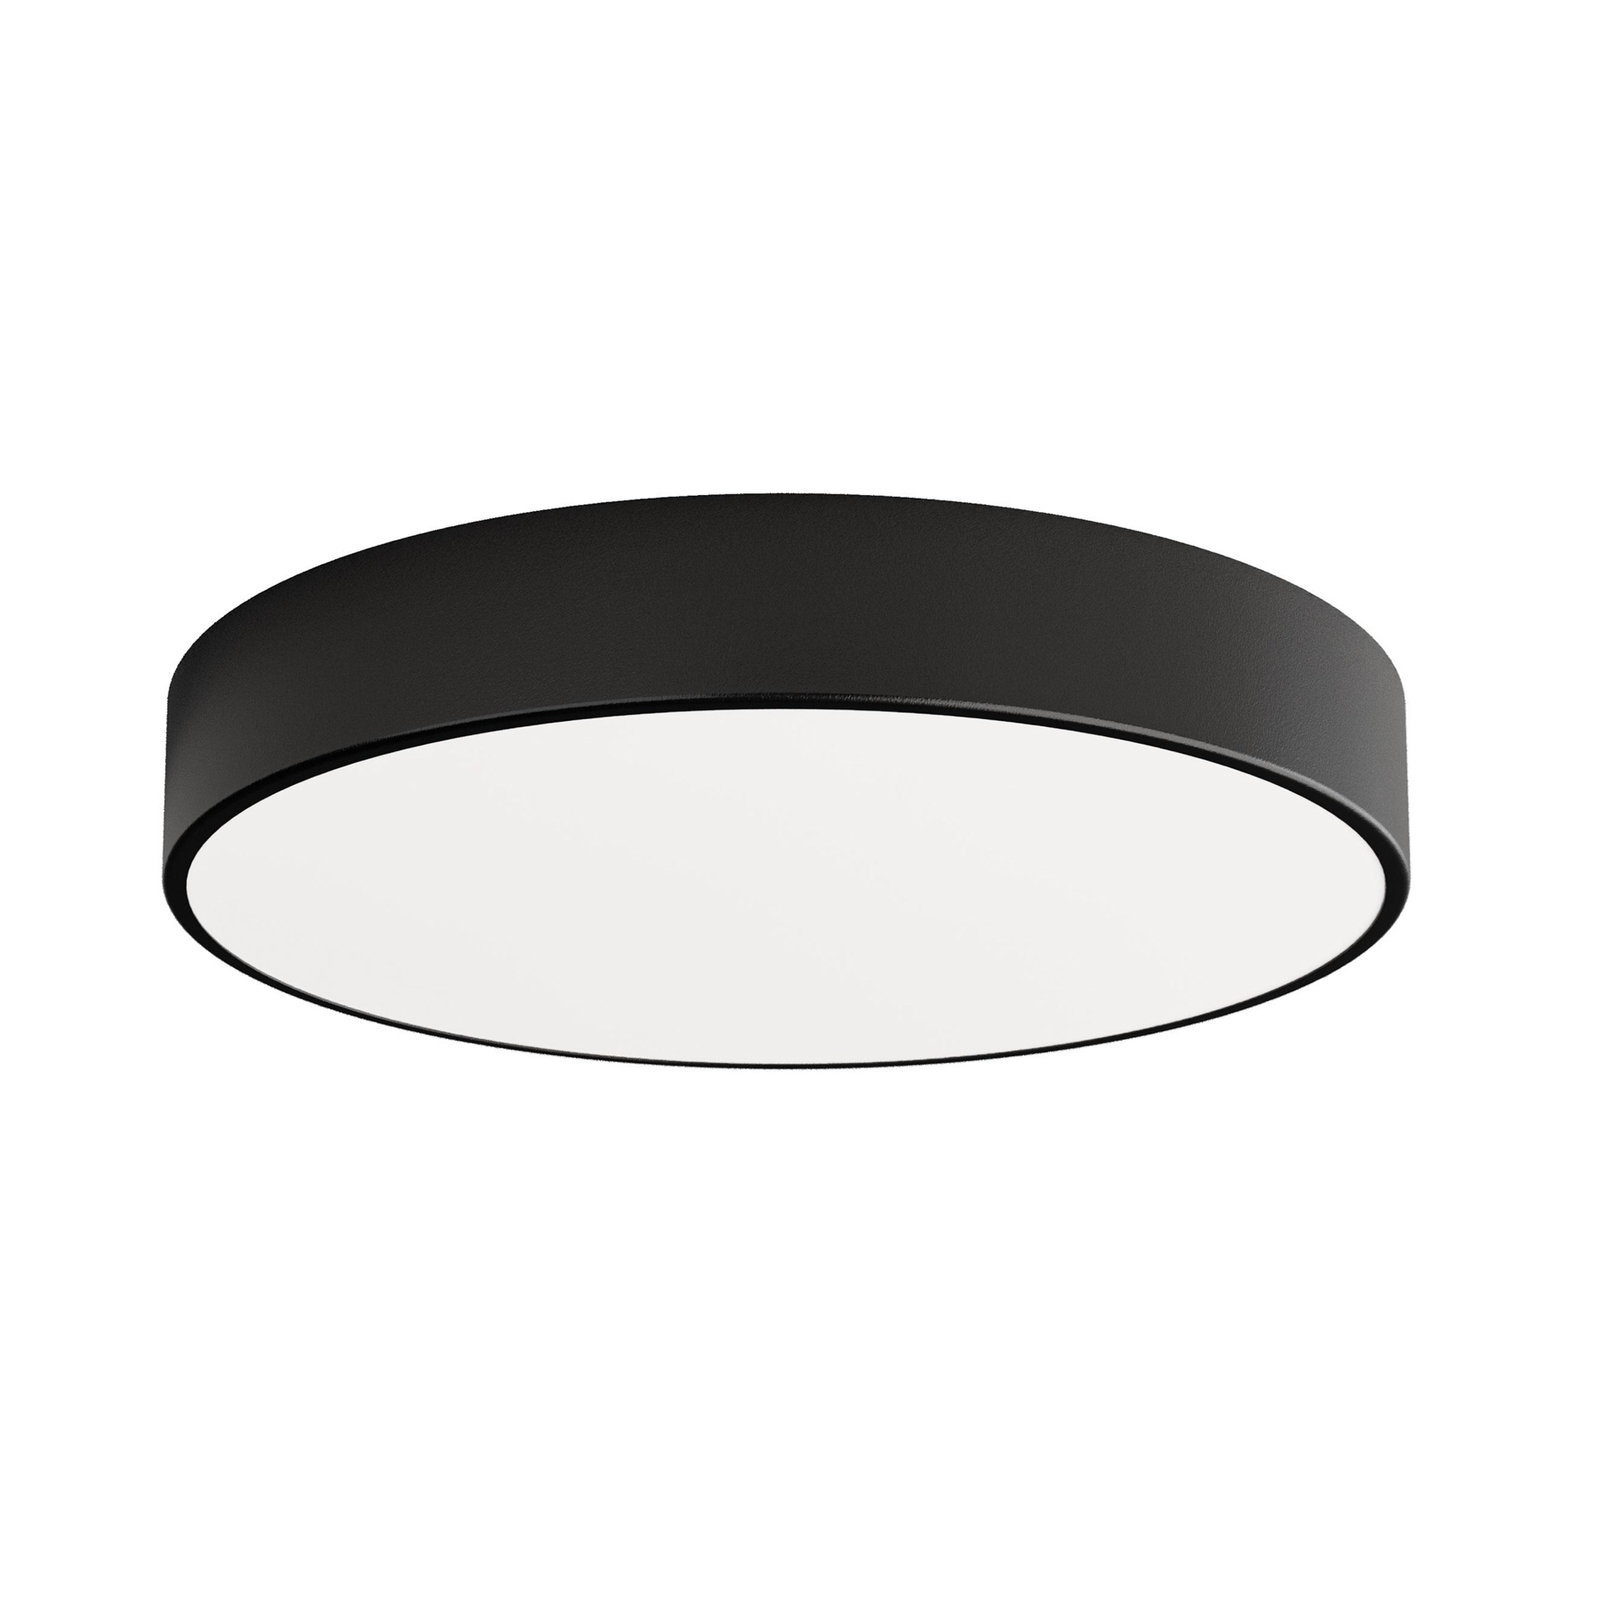 Cleo taklampe, svart, Ø 50 cm, metall, IP54